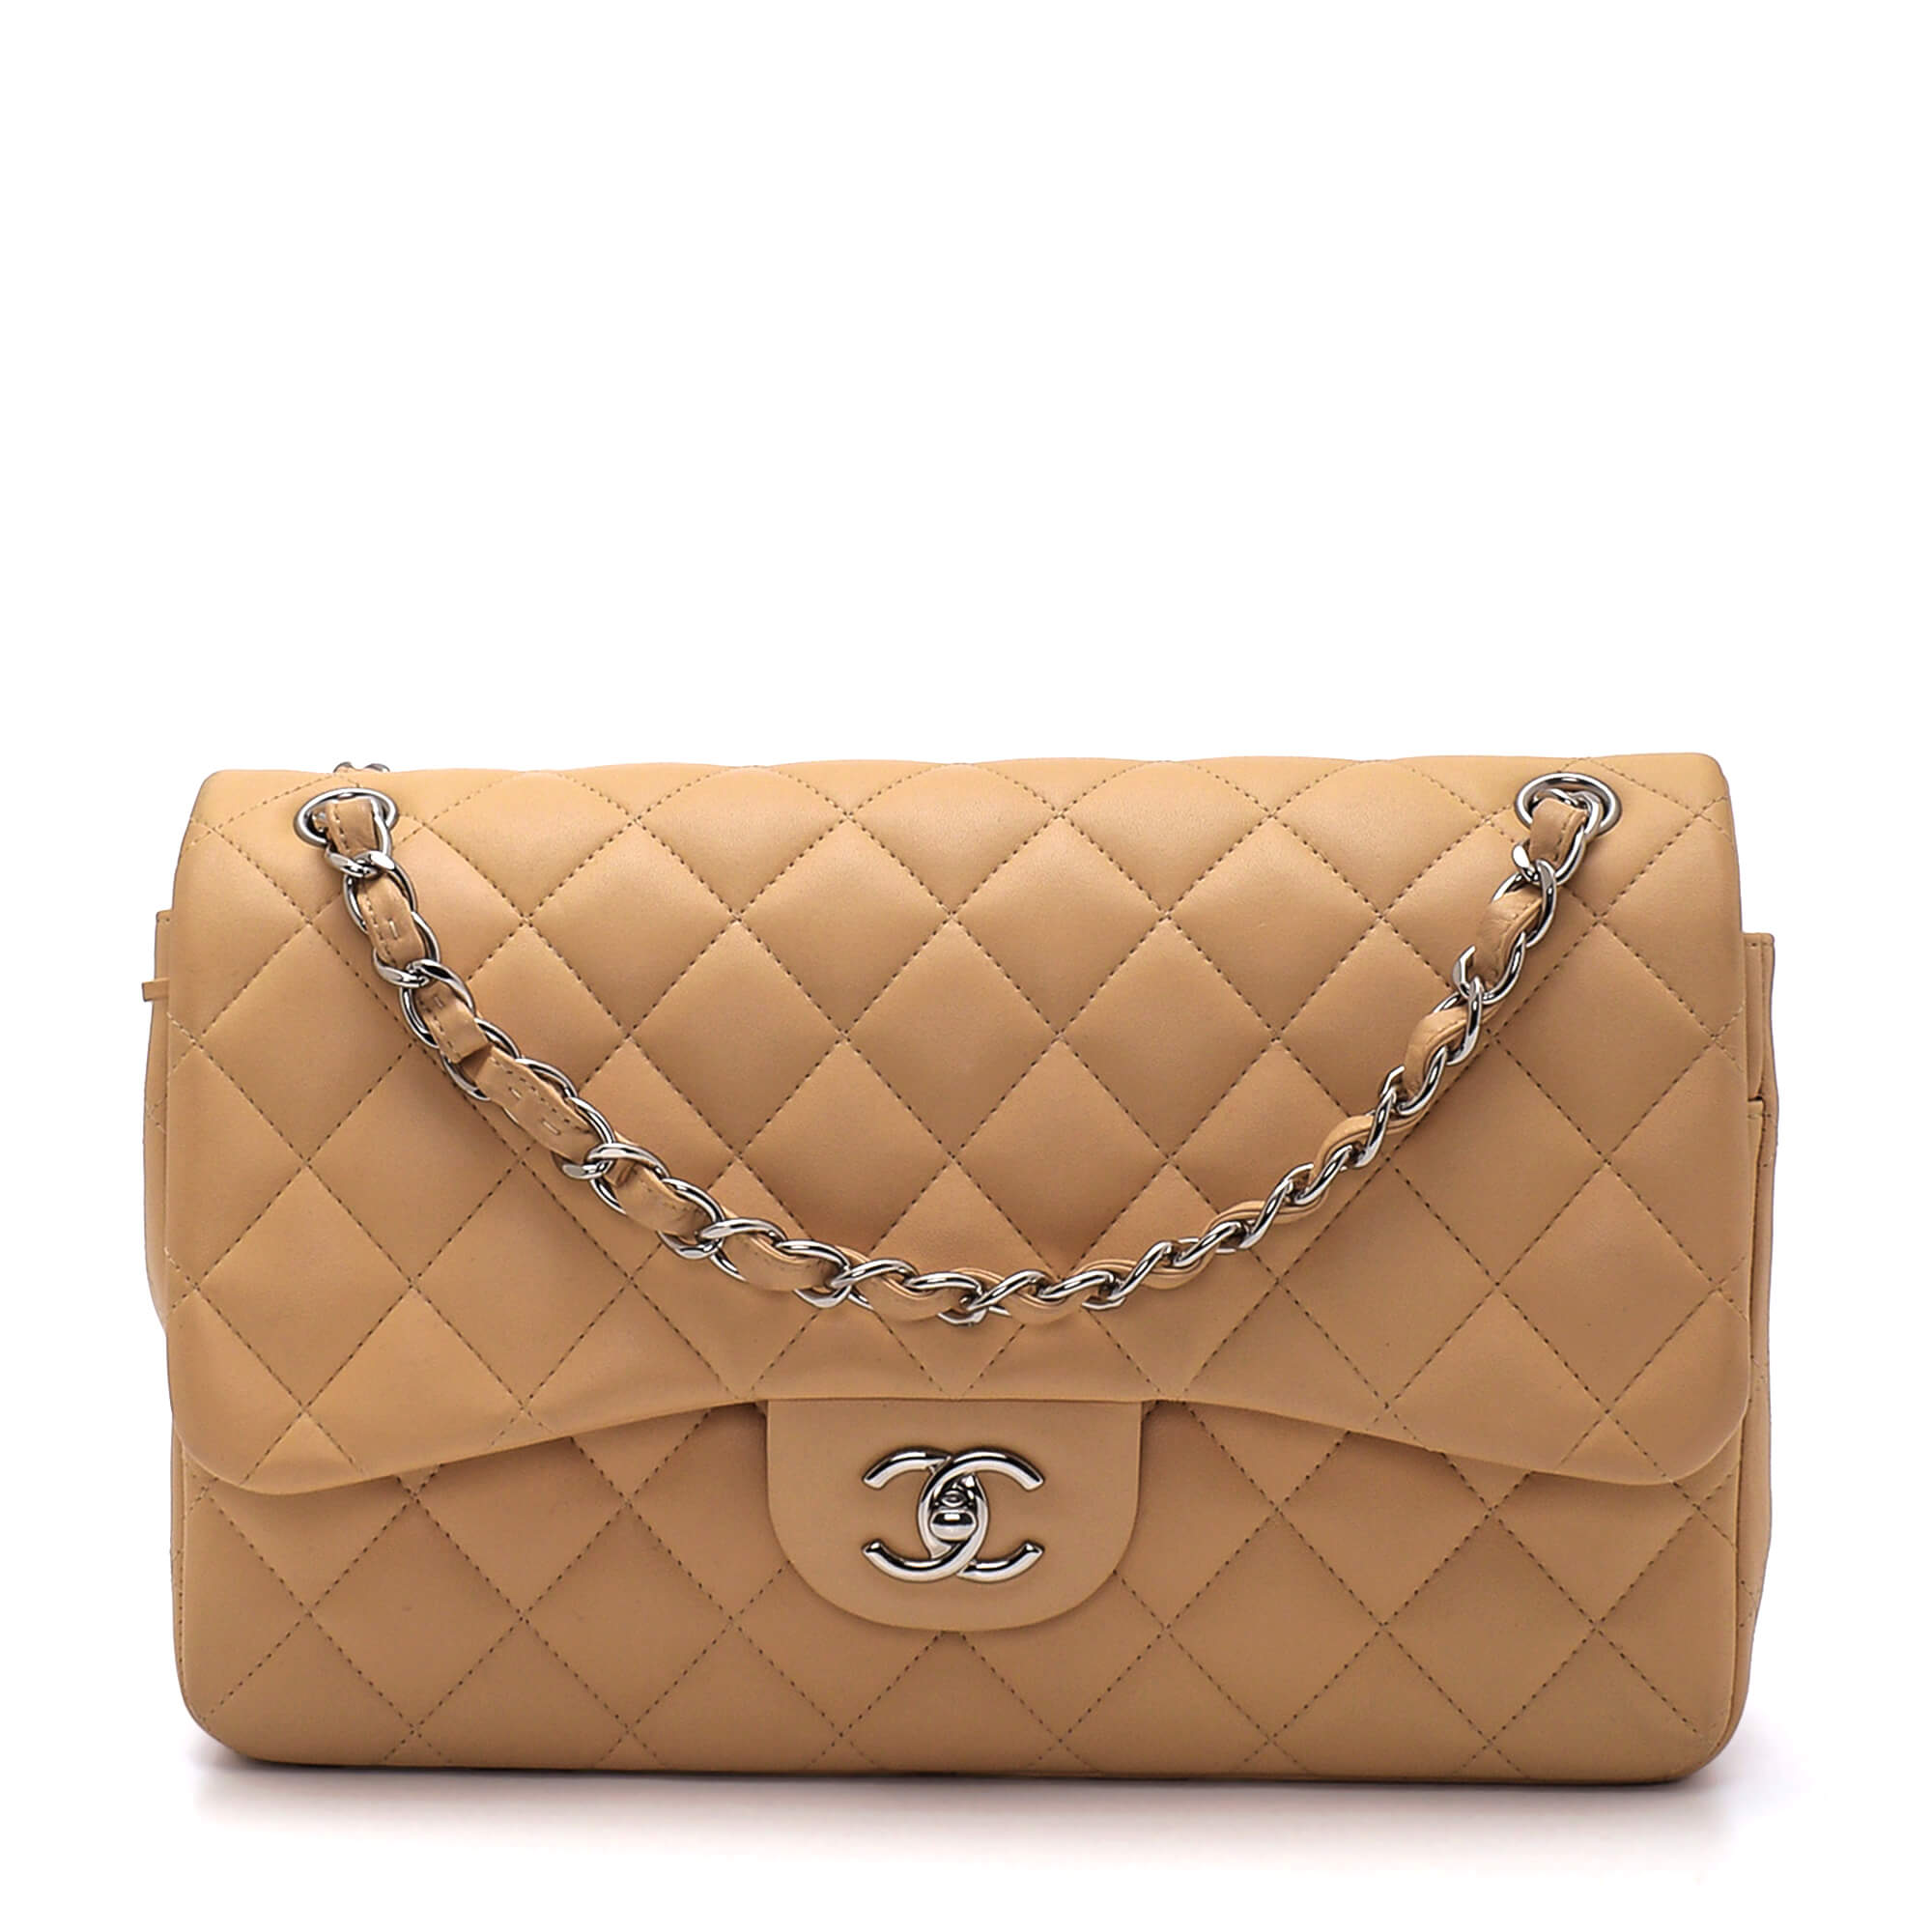 Chanel - Beige Quilted Lambskin Jumbo Double Flap Bag